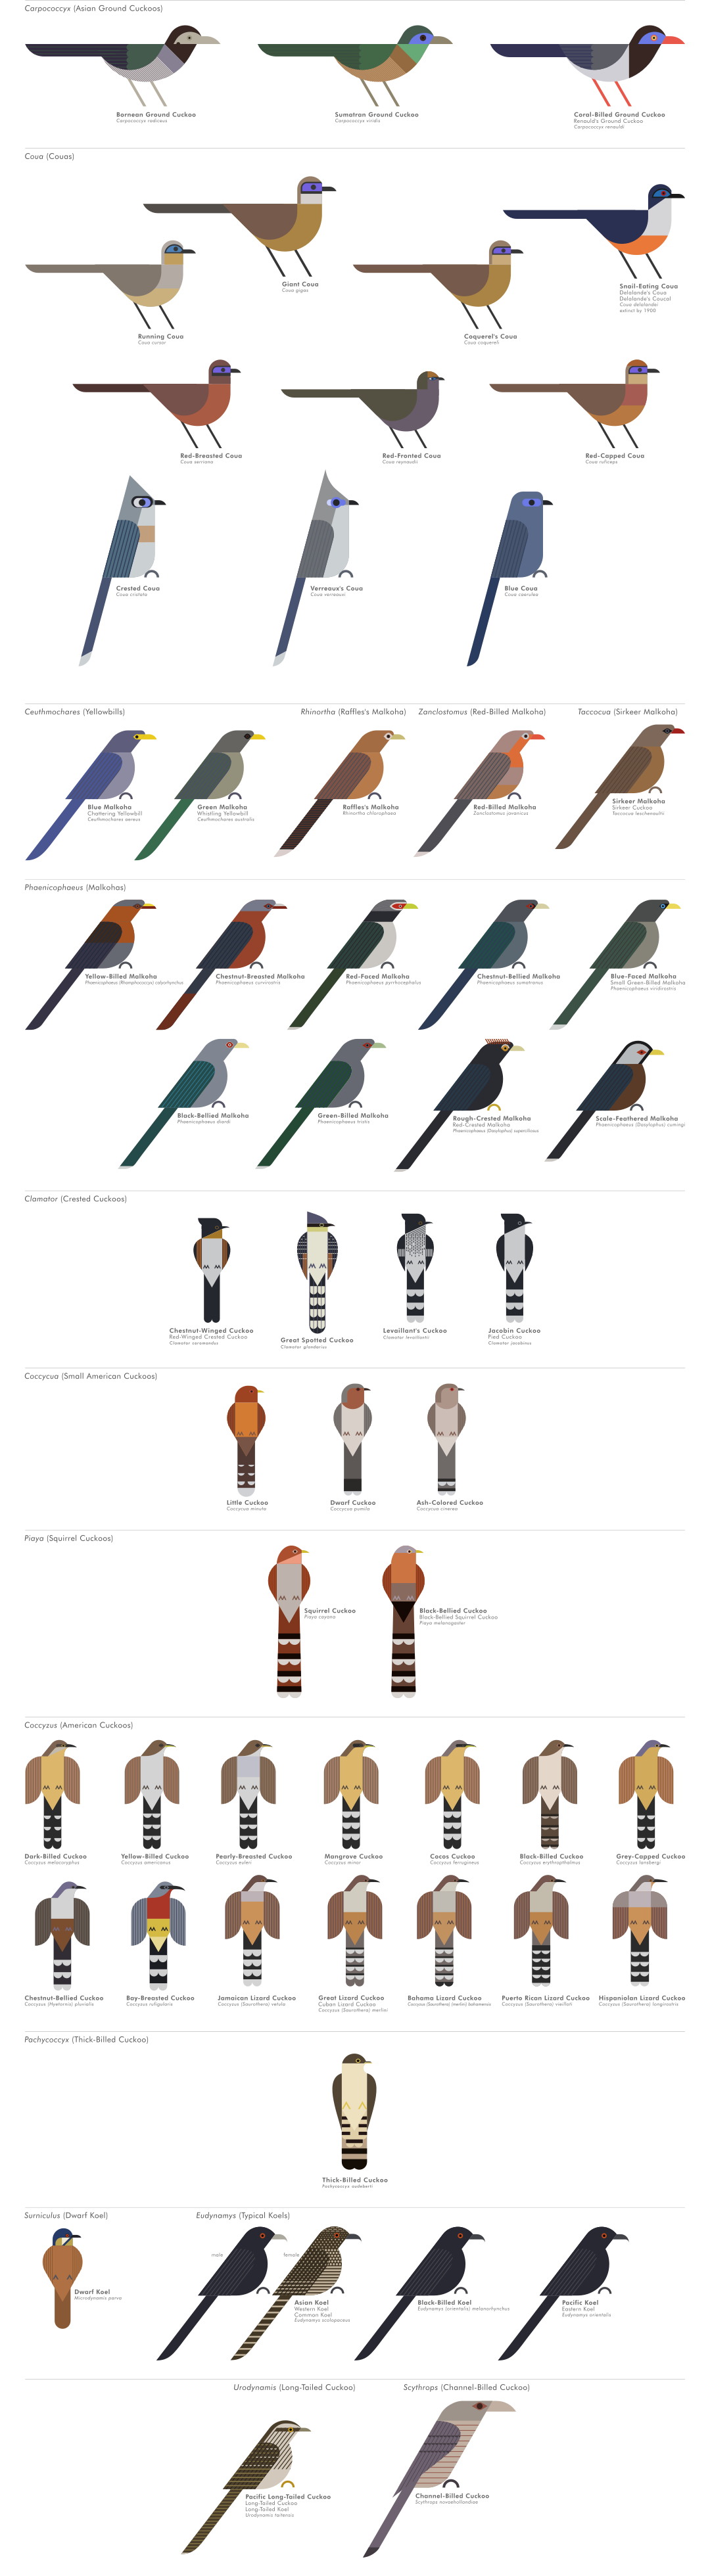 scott partridge - ave - avian vector encyclopedia - koels Cuculidae Cuculiformes - vector bird art